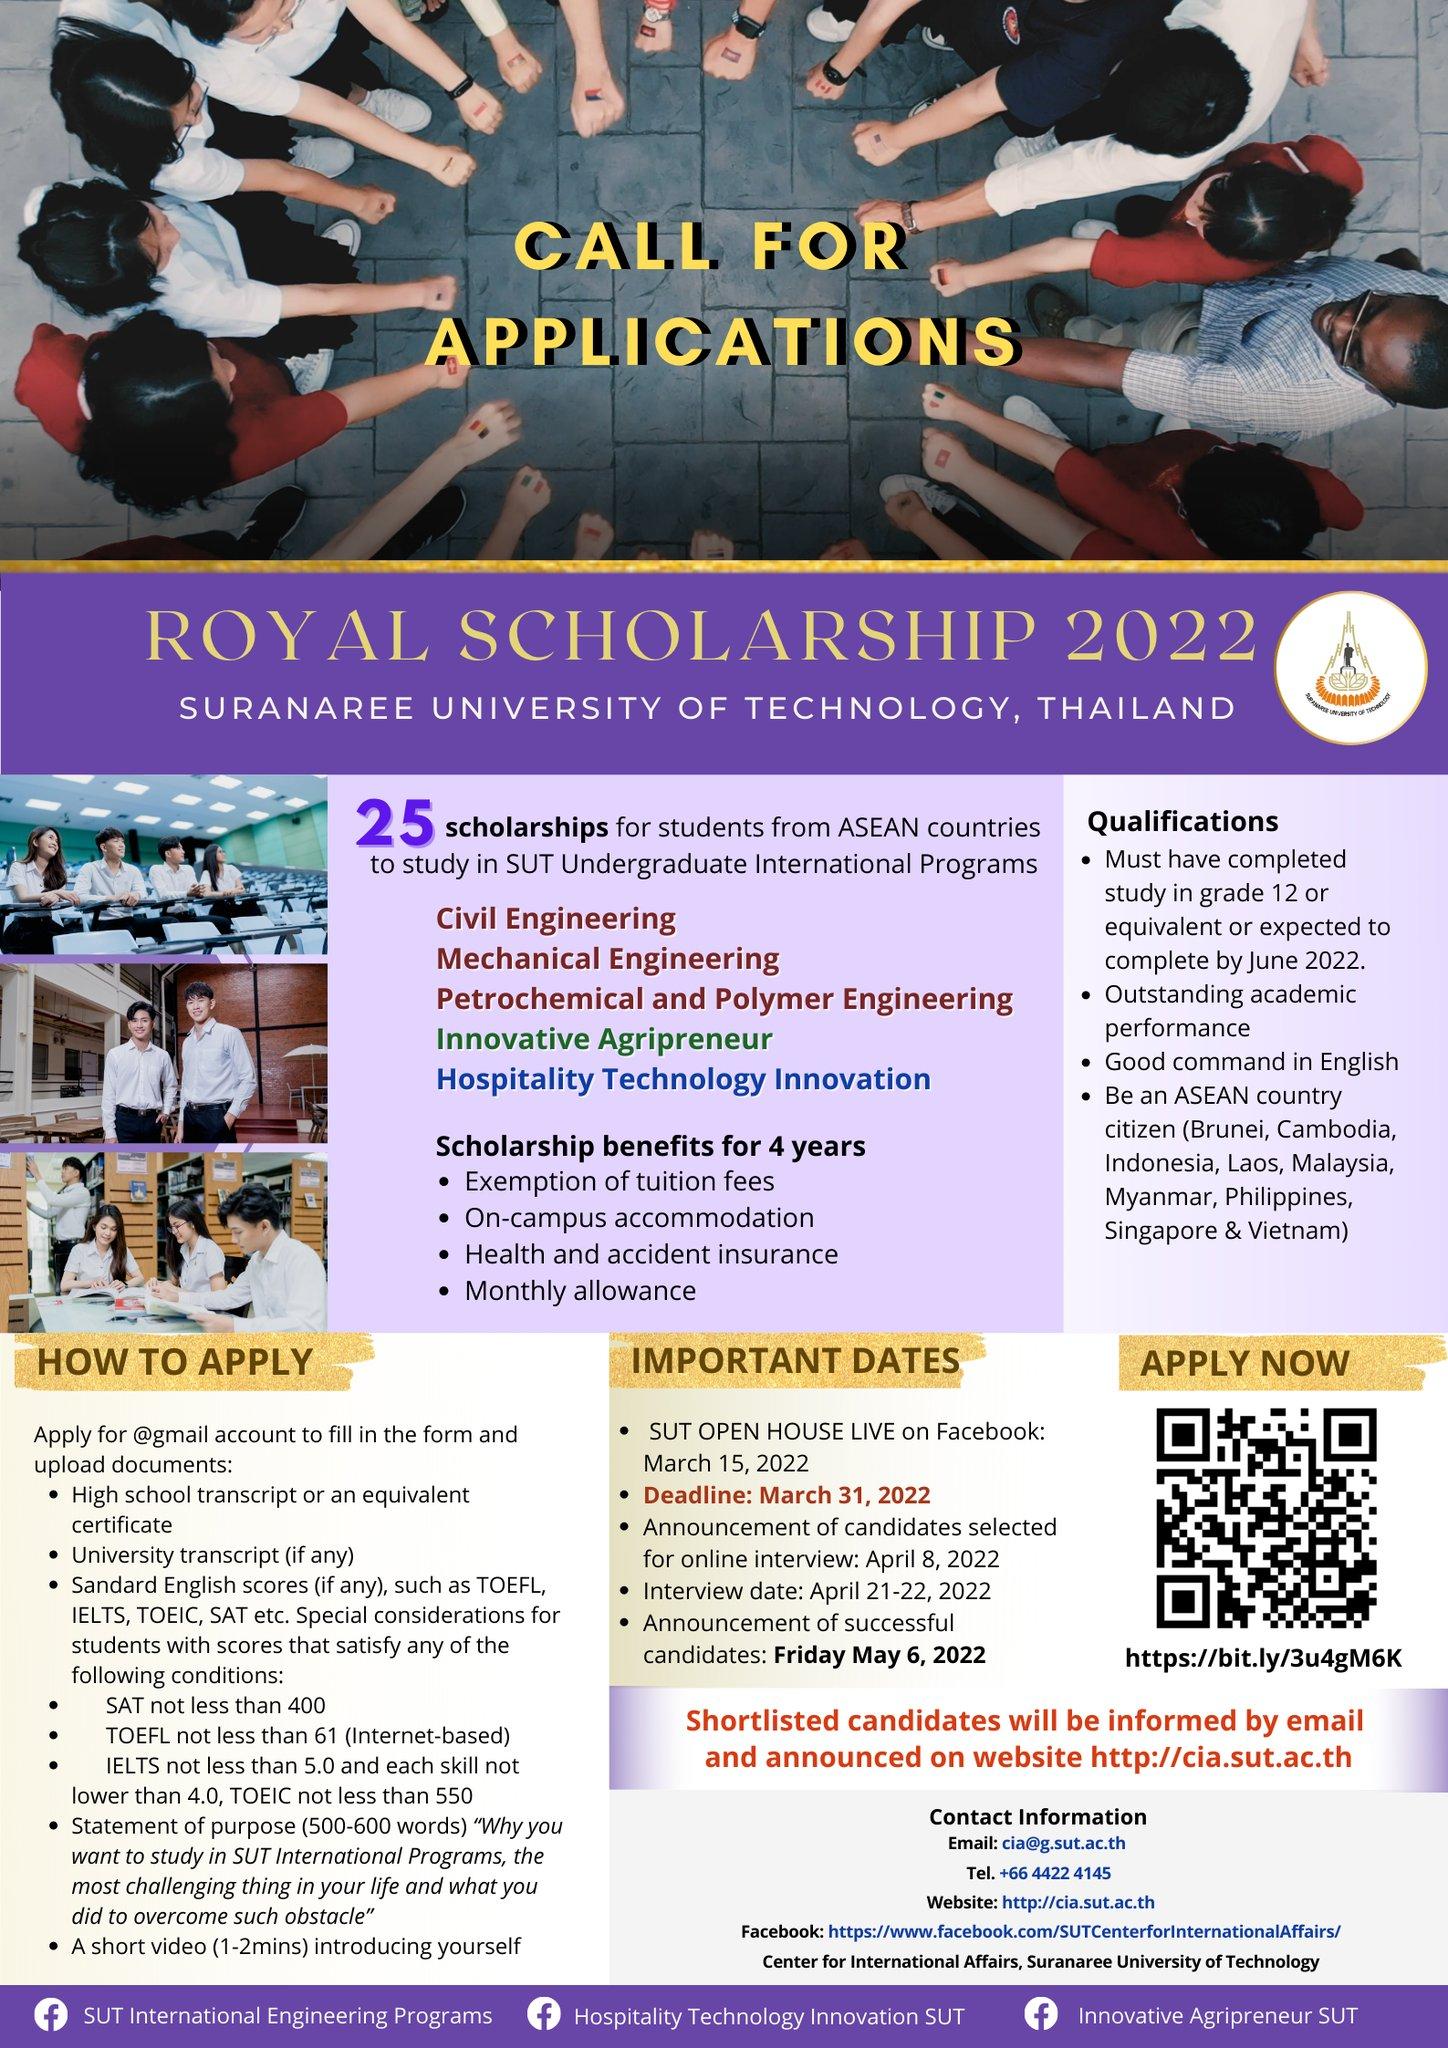 Royal Scholarship 2022 from SURANAREE UNIVERSITY OF TECHNOLOGY